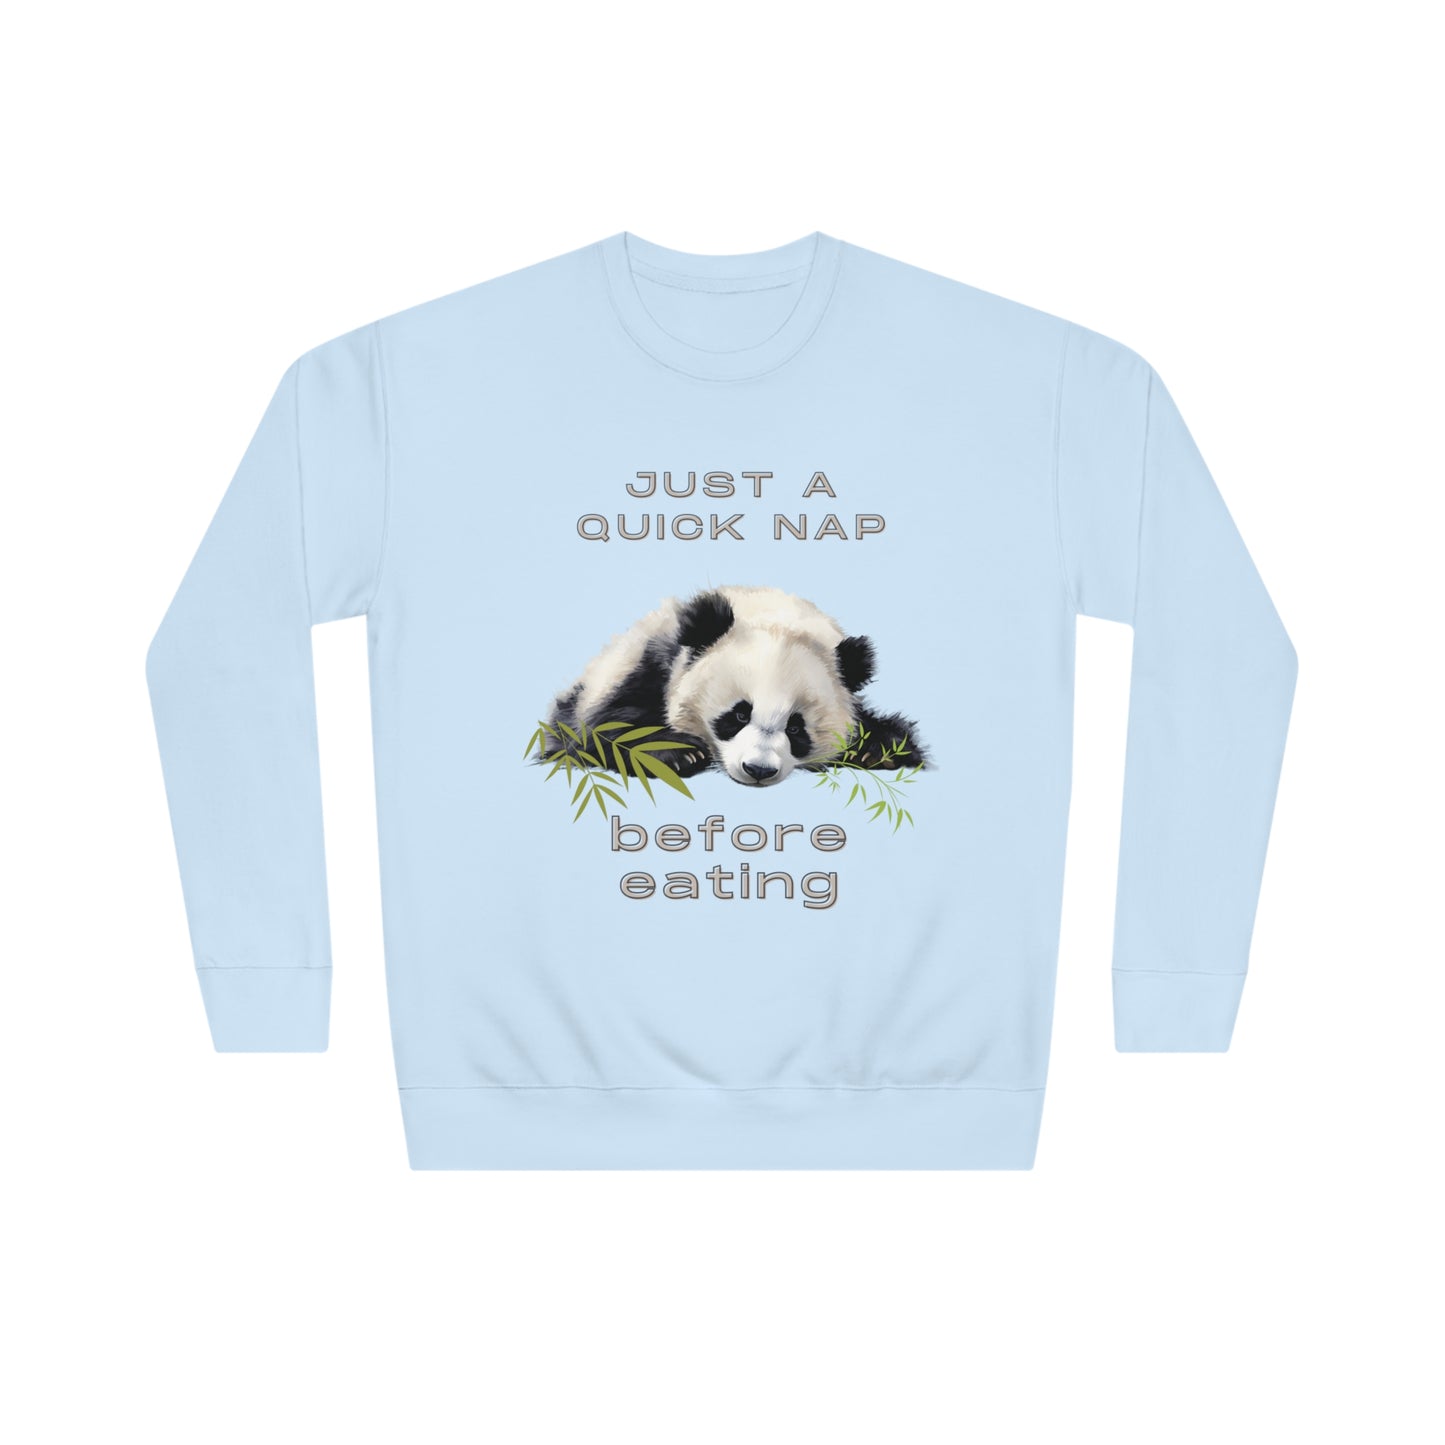 Just a Quick Nap Before Eating Sweatshirt | Embrace Cozy Relaxation | Funny Panda Sweatshirt Sweatshirt Sky Blue L 